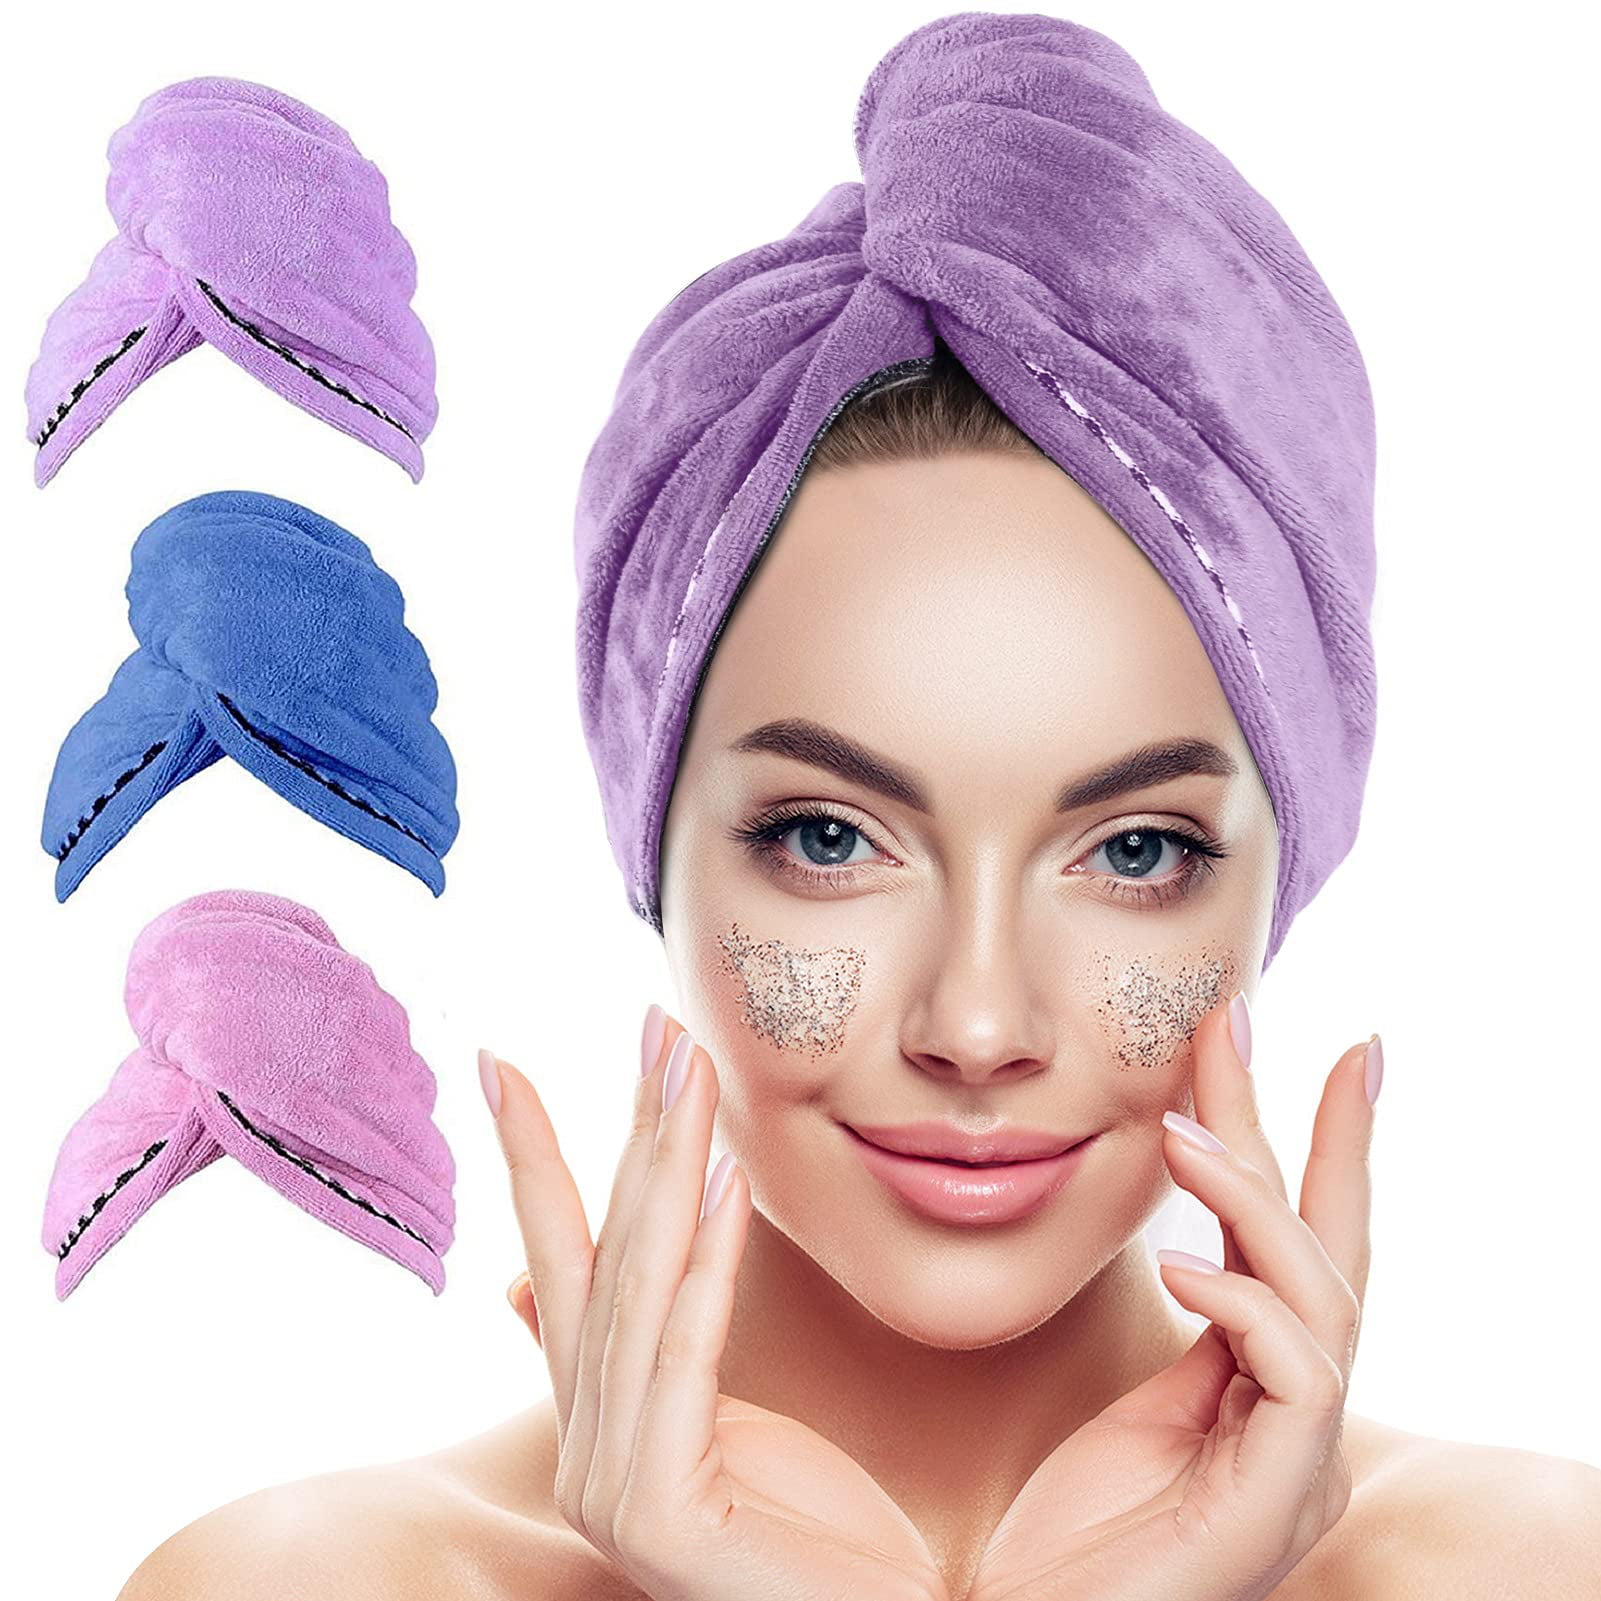 Super Absorbent Anti-Frizz Microfiber Hair Towel Large 63cmx24cm for Women Girls 